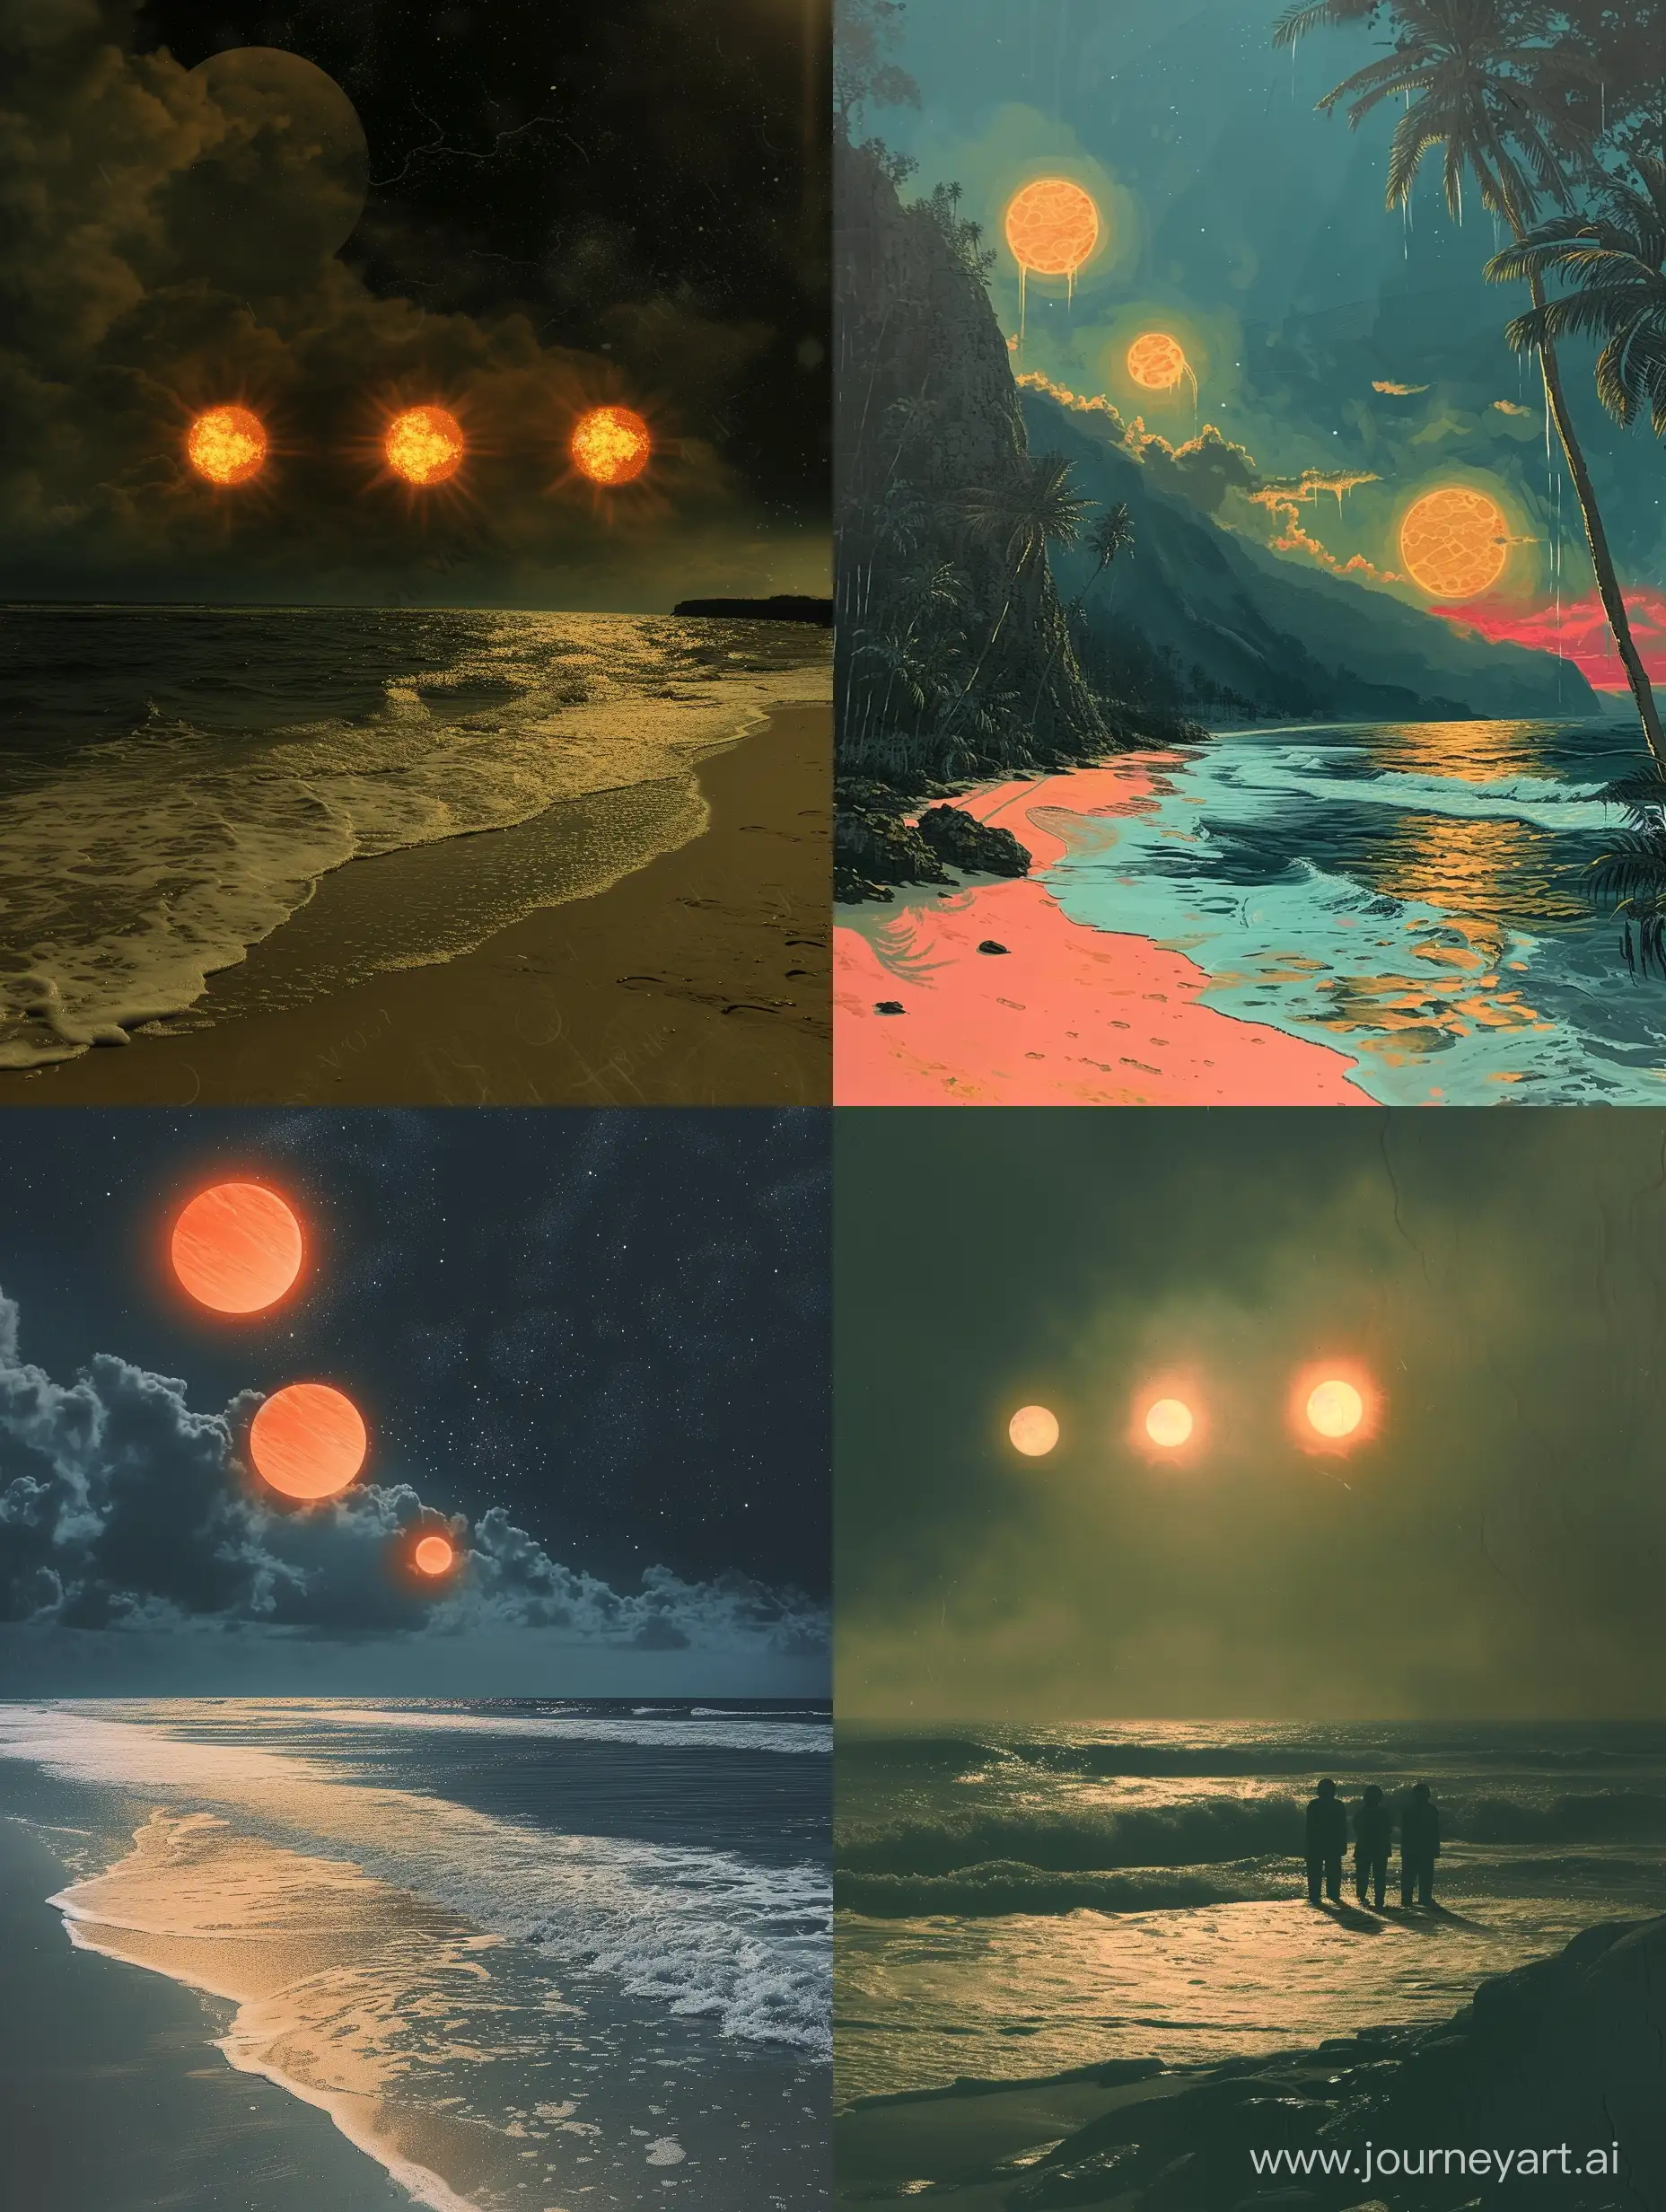 Alien beach with three suns 
